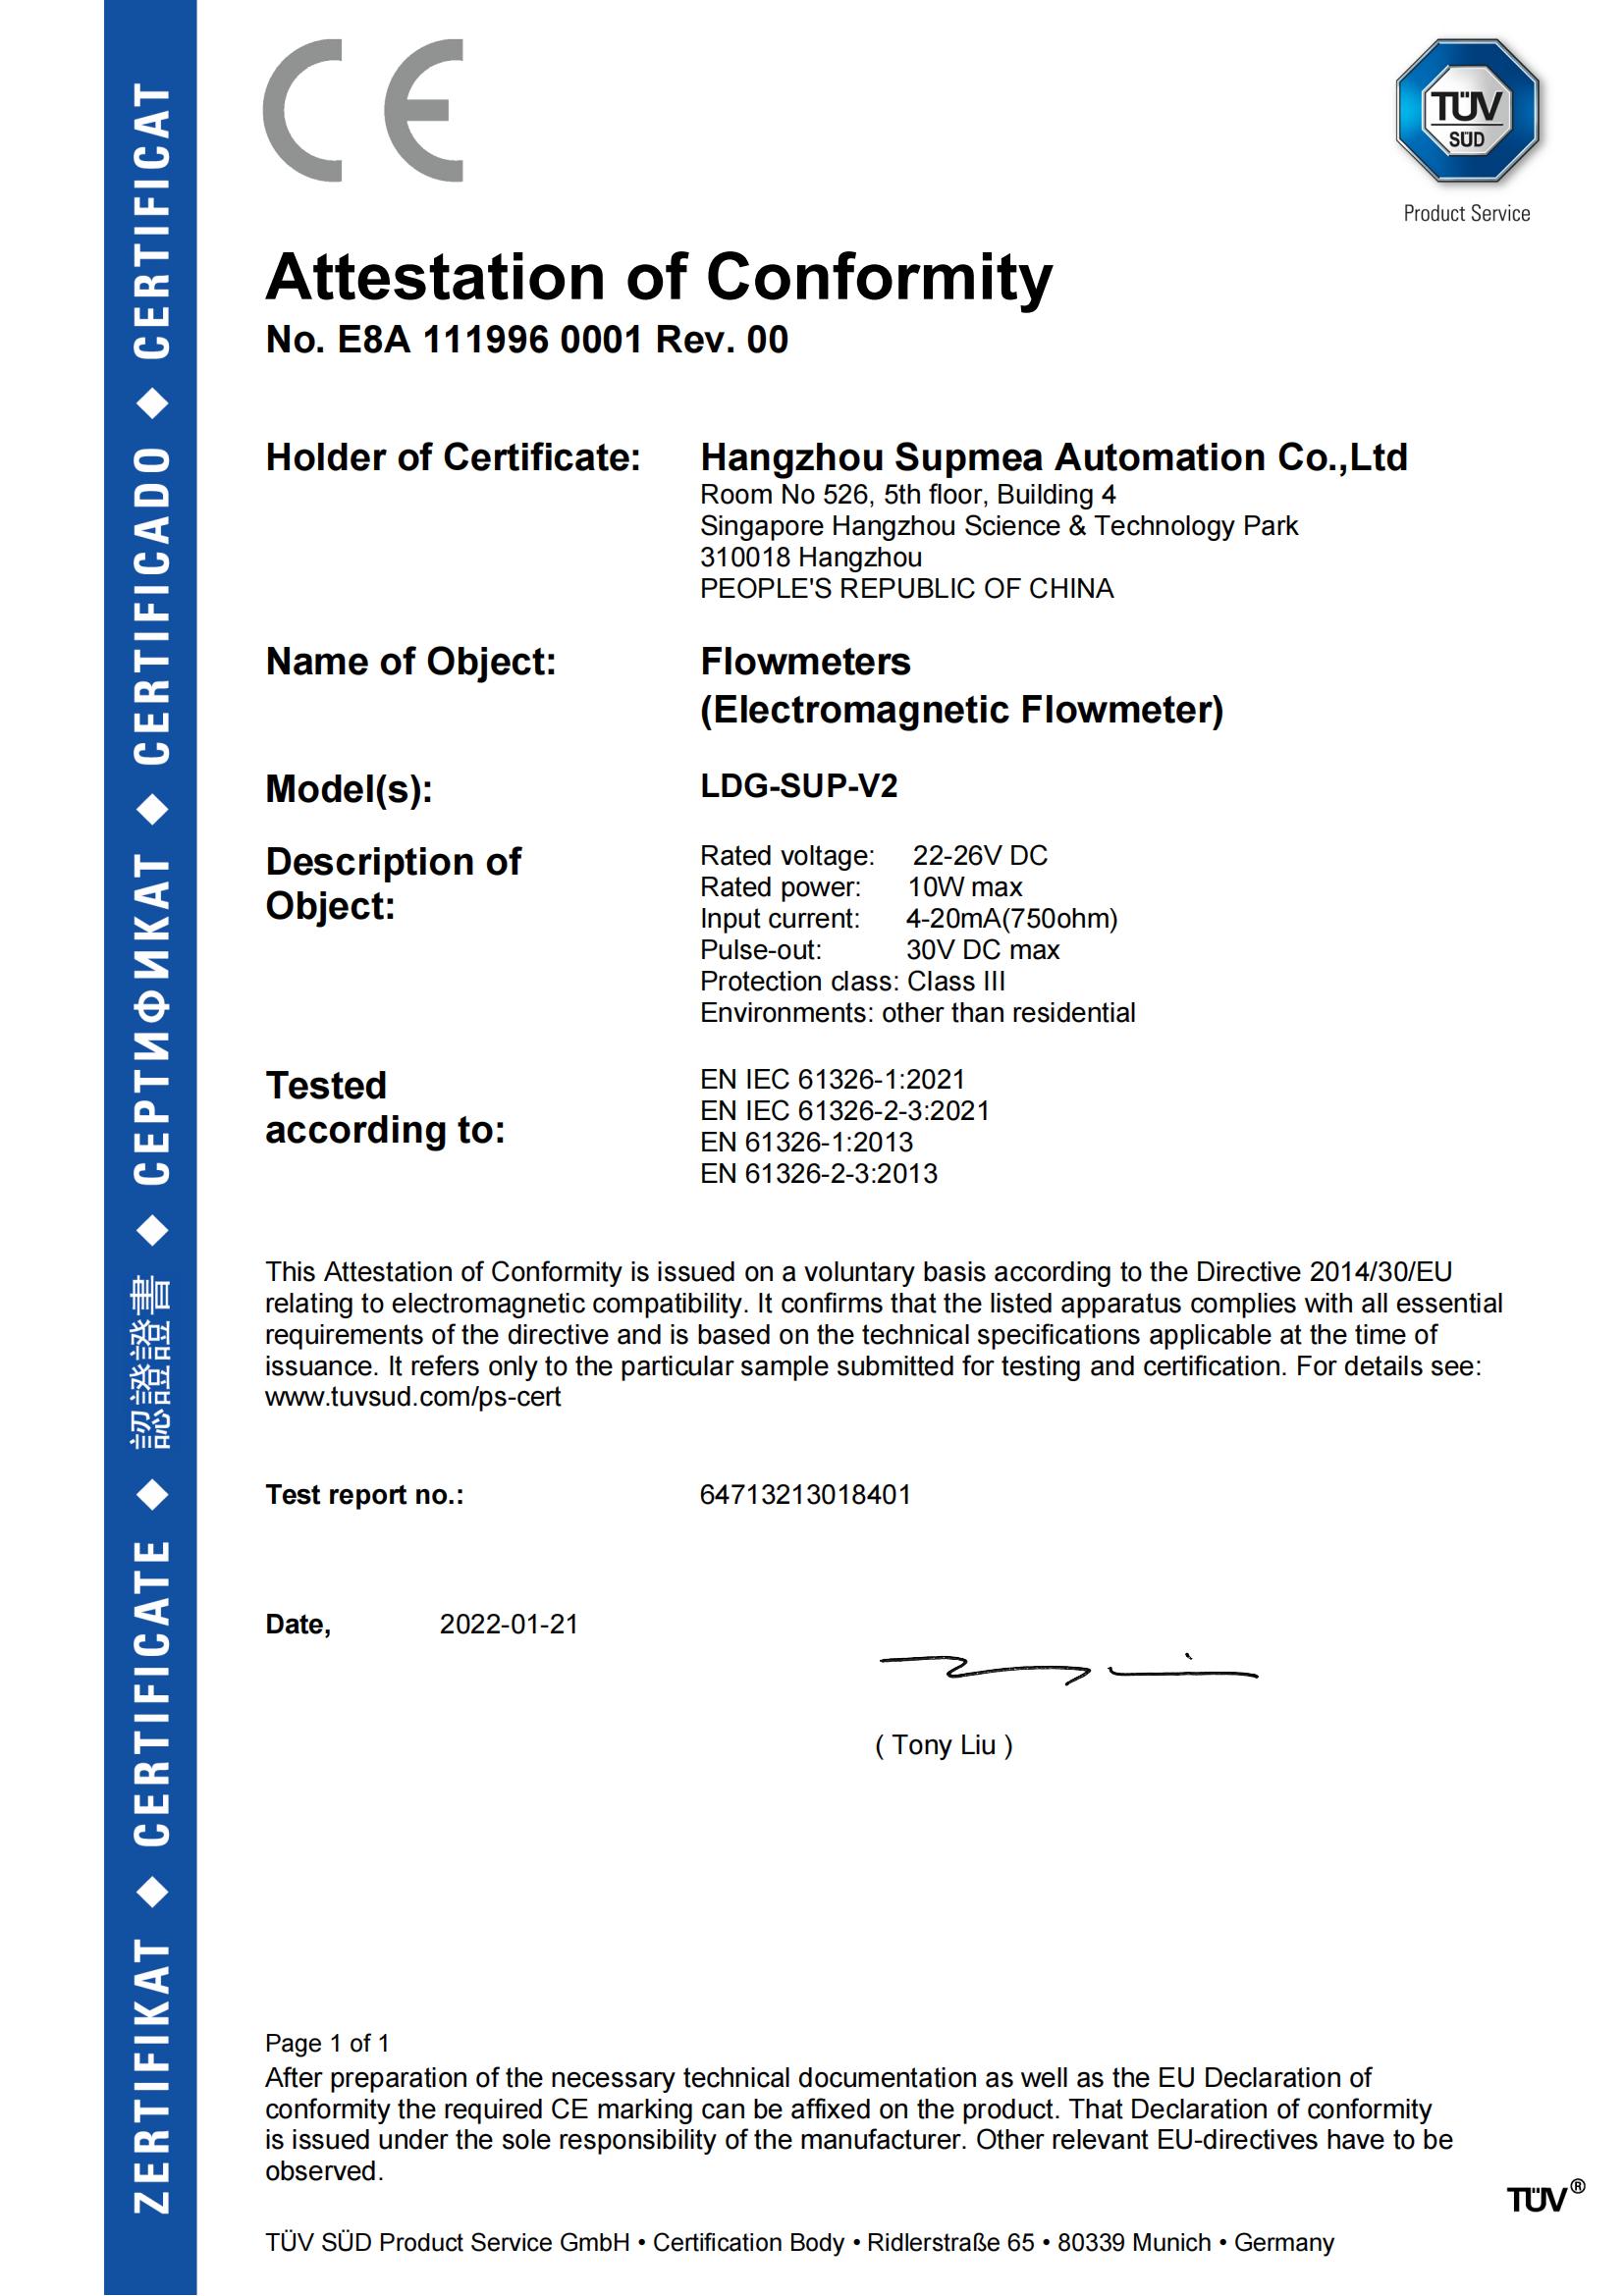 CE certificate (TUV) - electromagnetic flowmeter